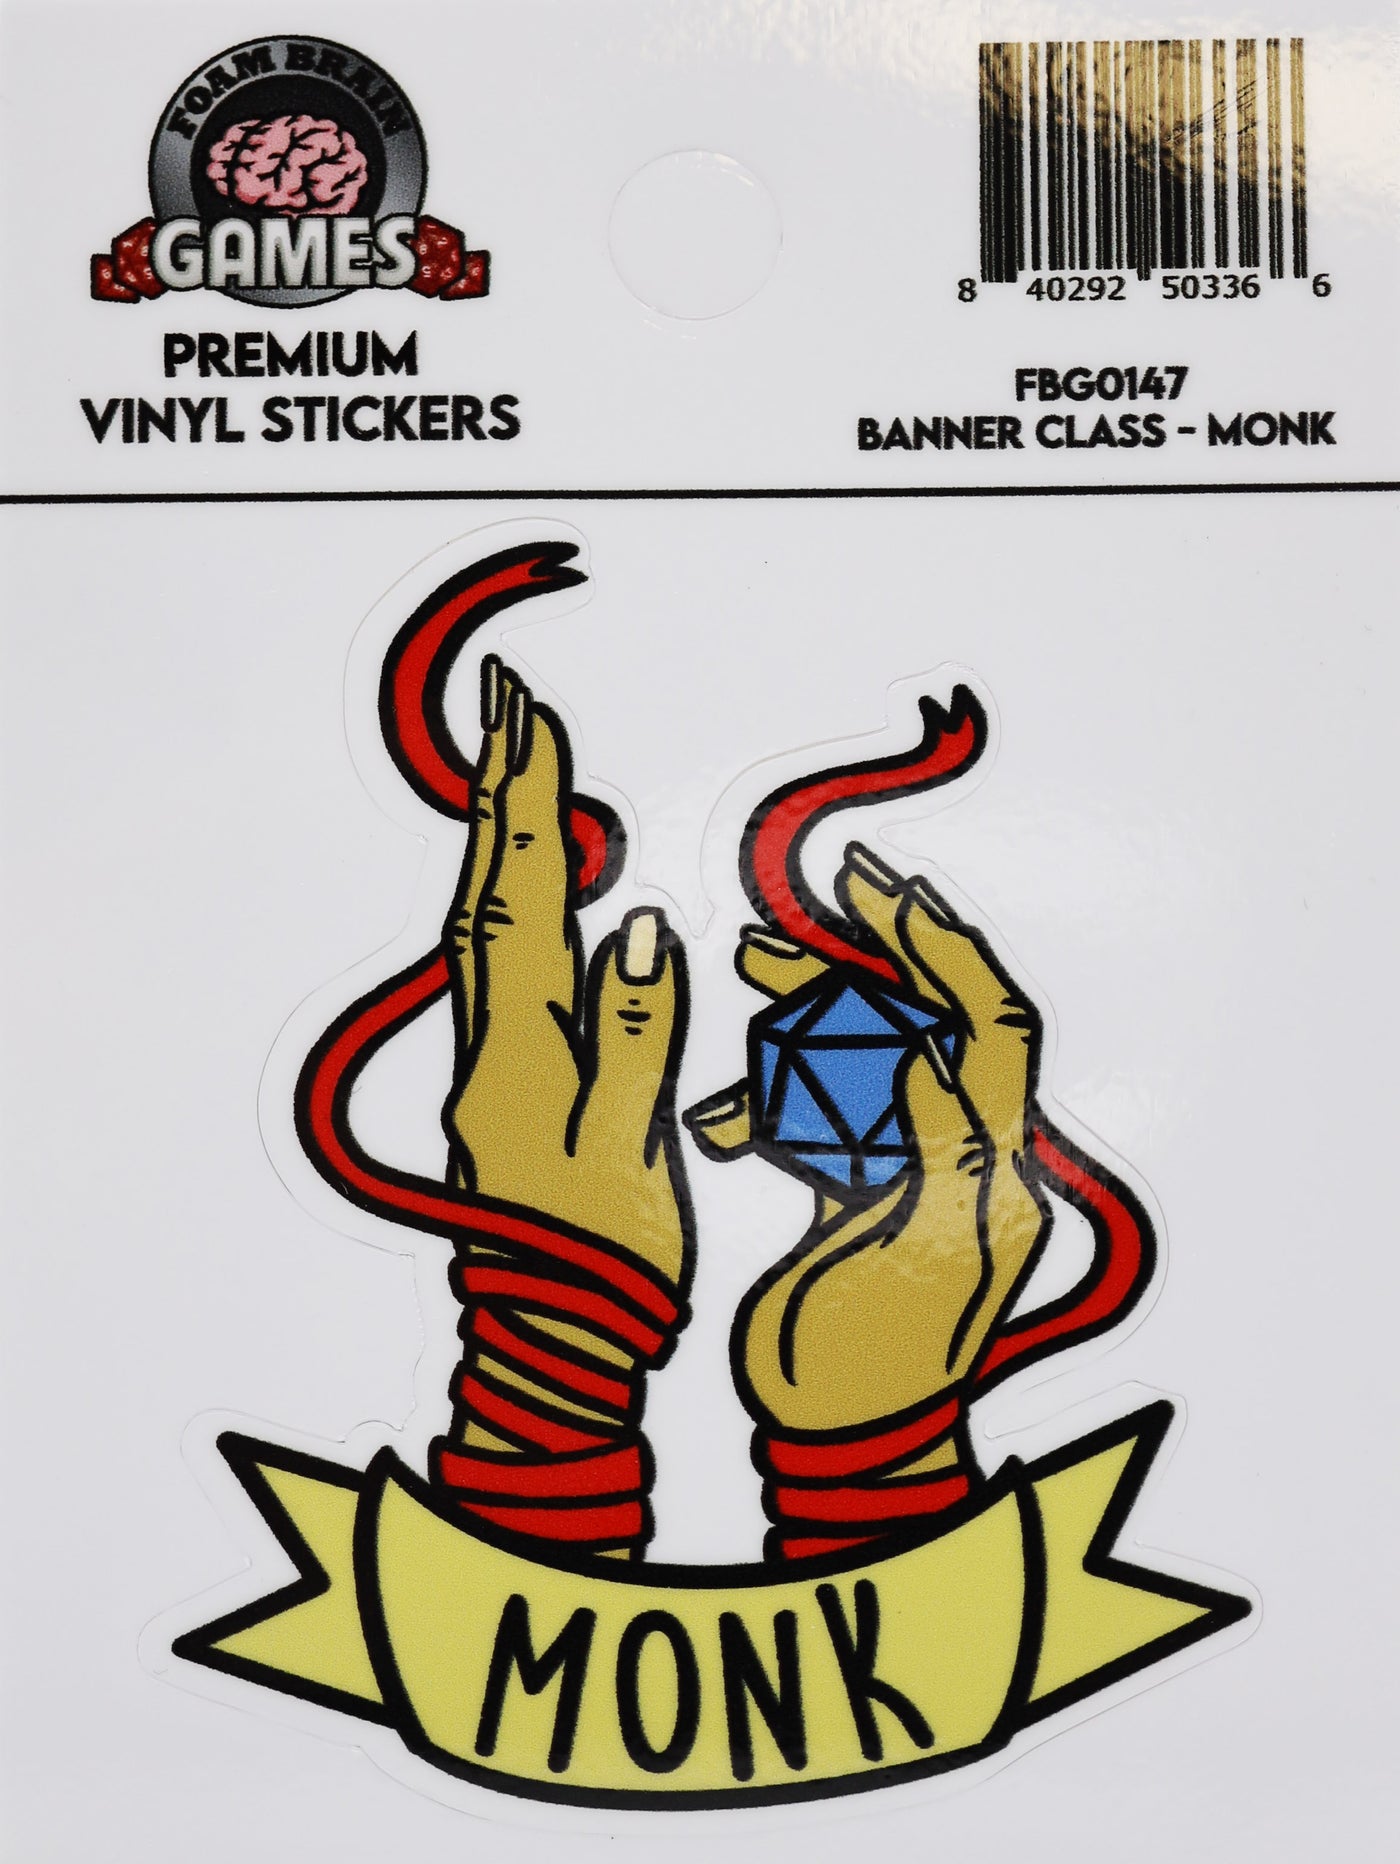 Banner Class Sticker: Monk Stickers Foam Brain Games